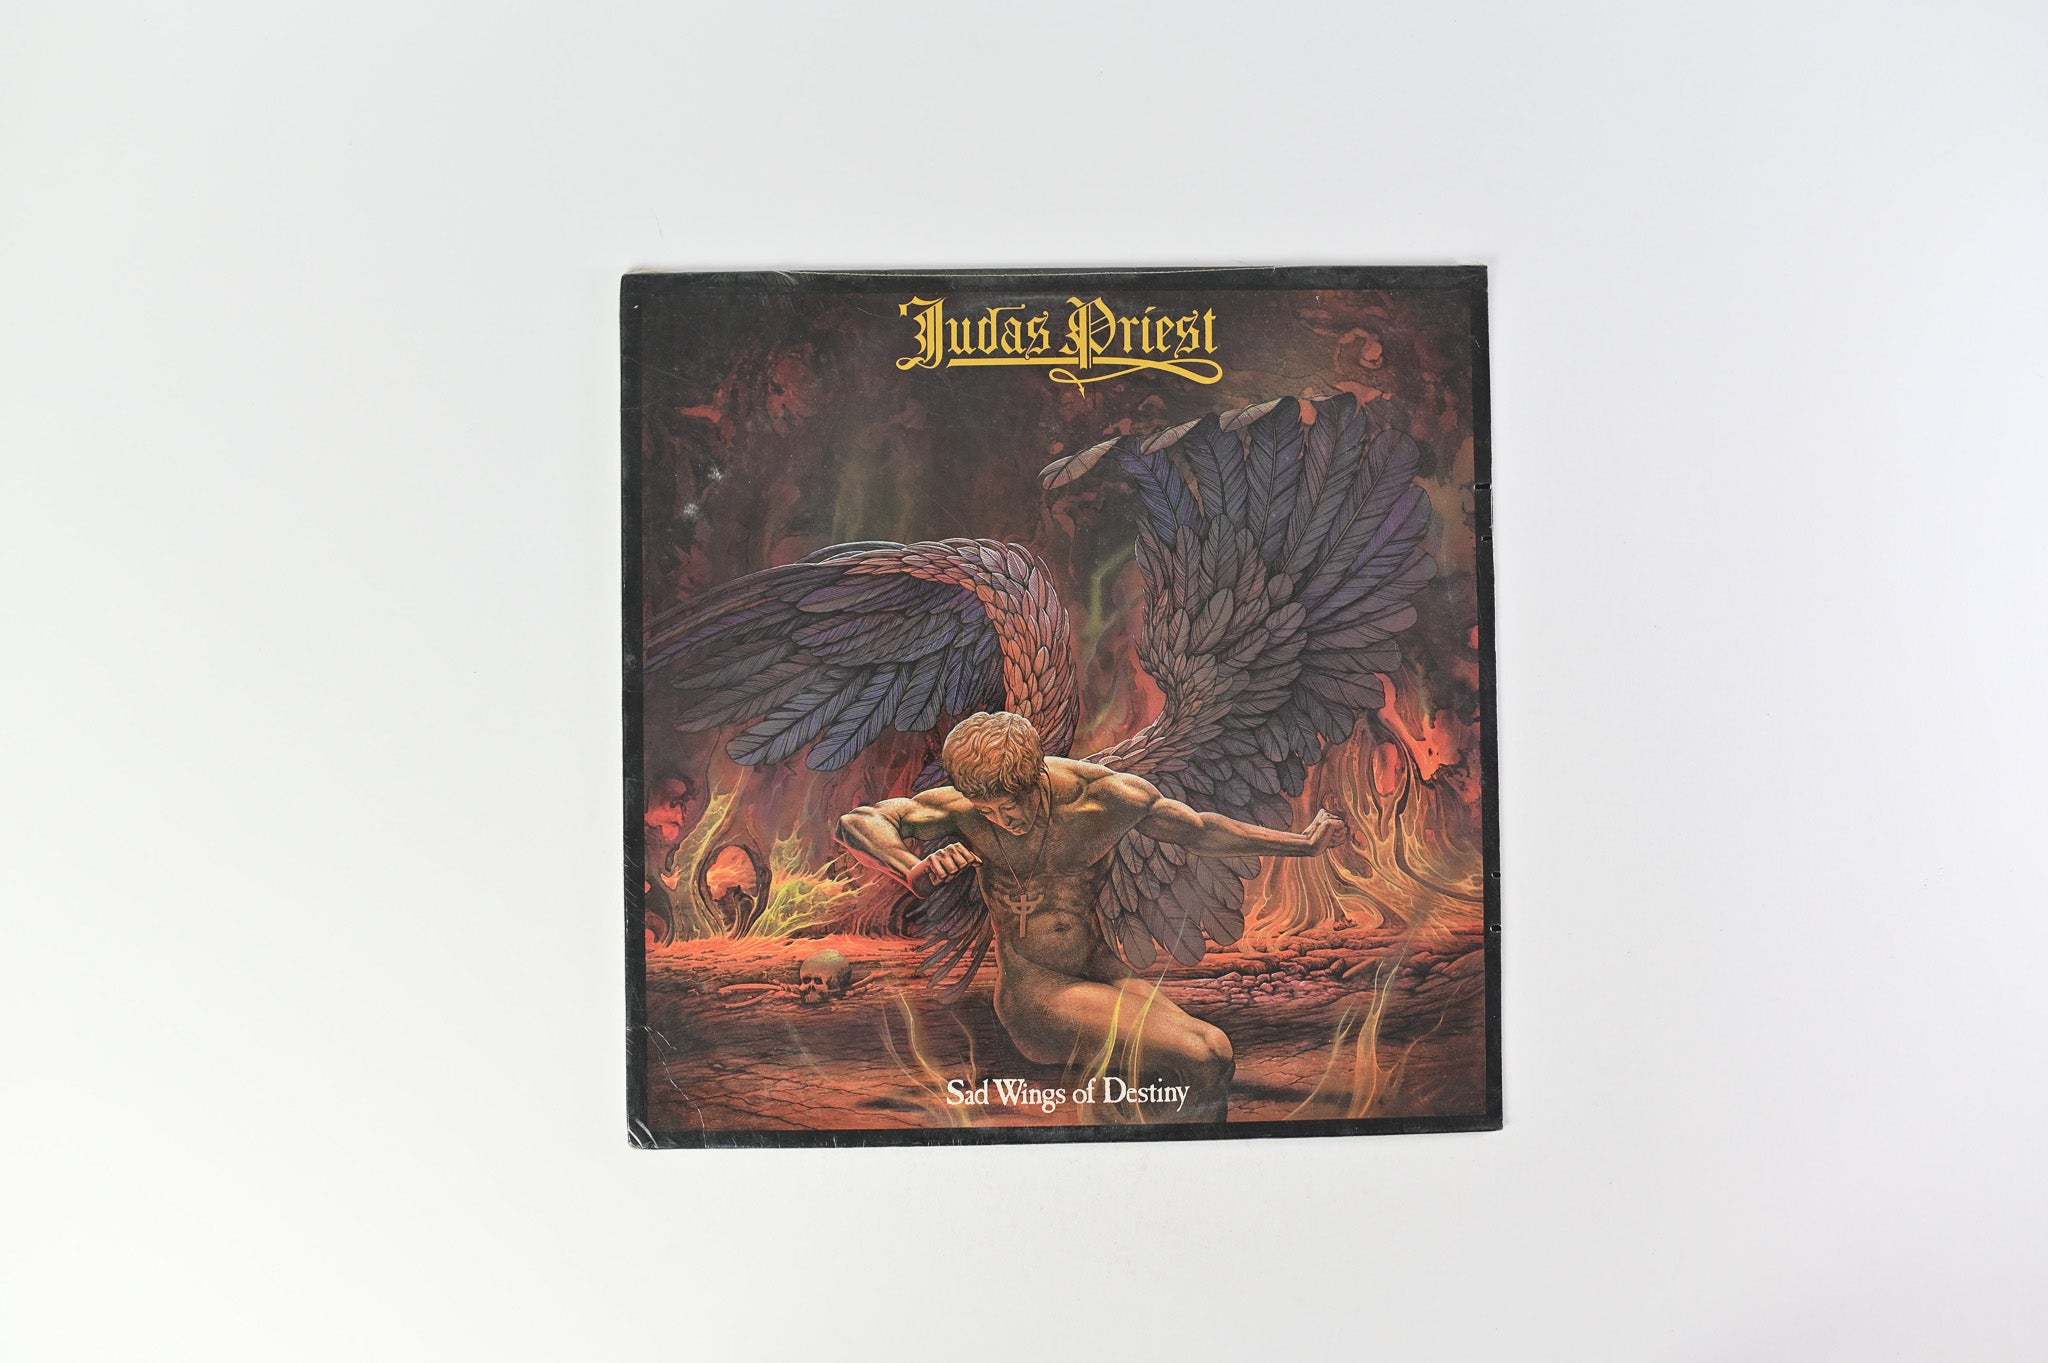 Sad wings of destiny, Judas Priest LP